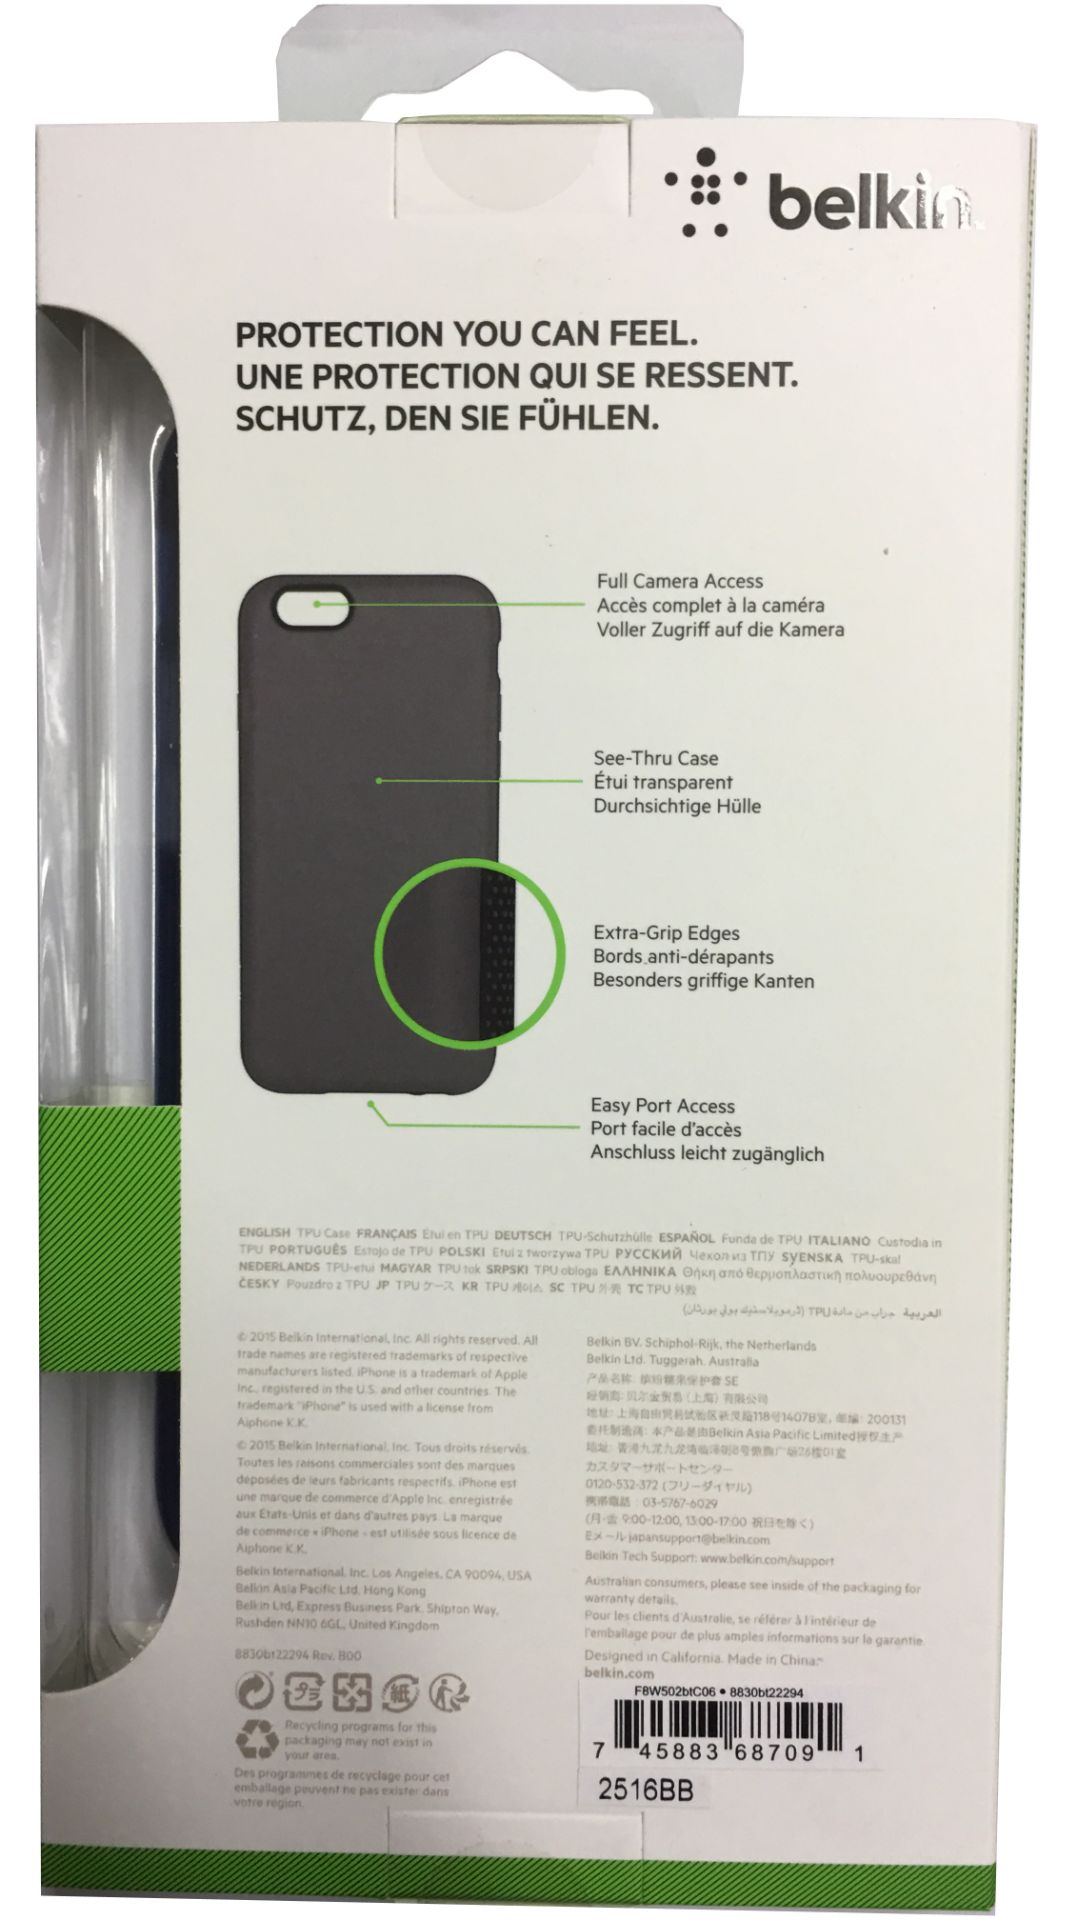 Lot of 40 Units-Belkin iPhone 6 Tectured Grip Slim Case - F8W502btC06 - Translucent / Blue